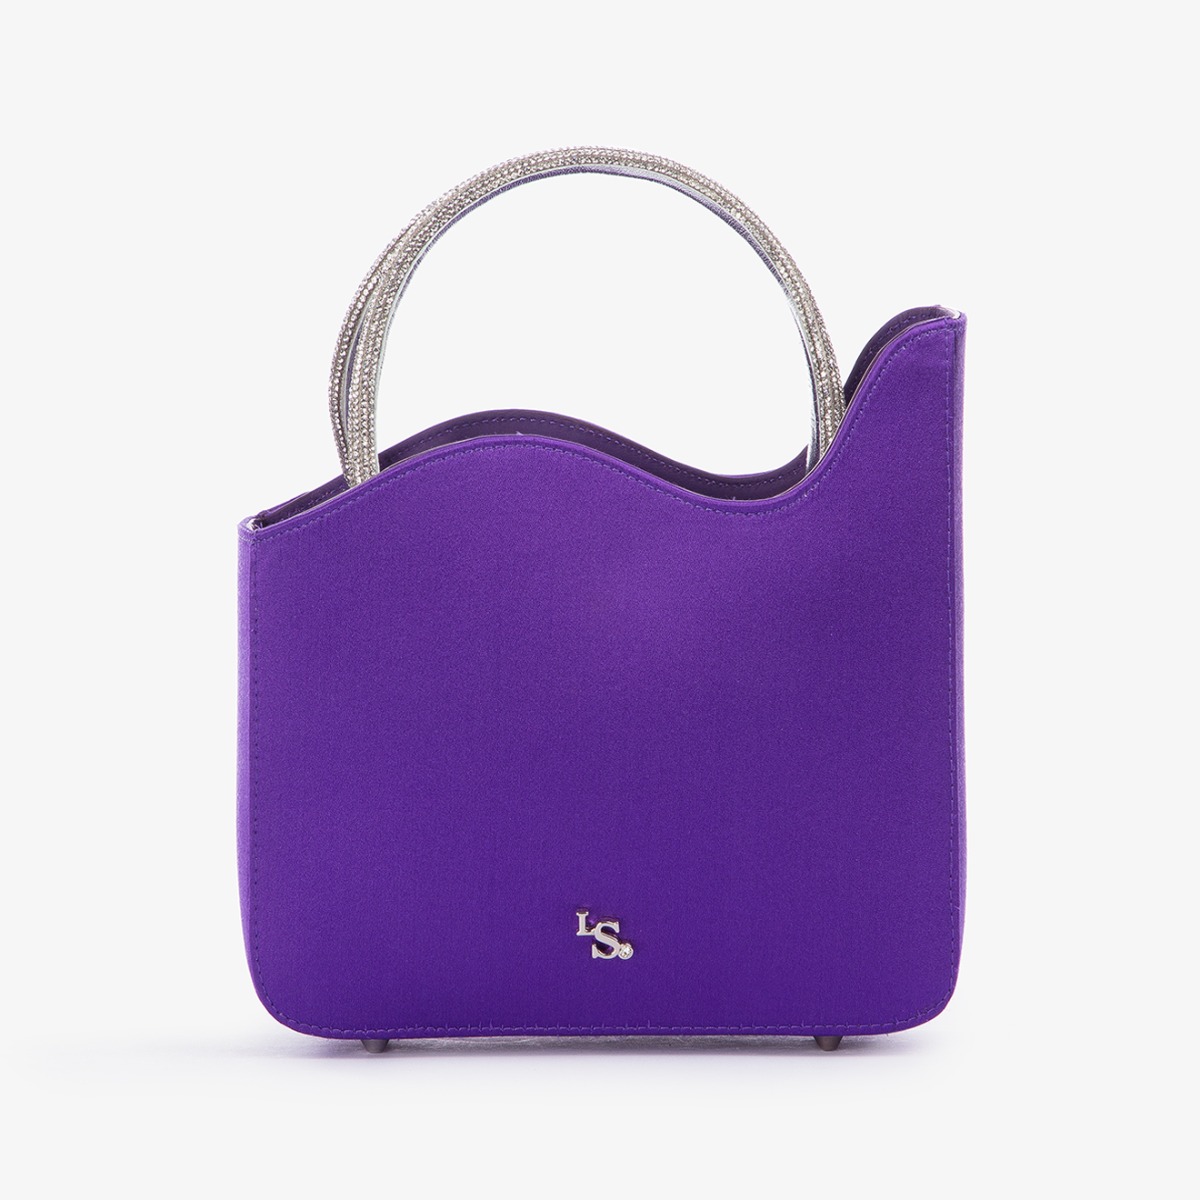 Kamala purple satin and Crystals bag - Le Silla